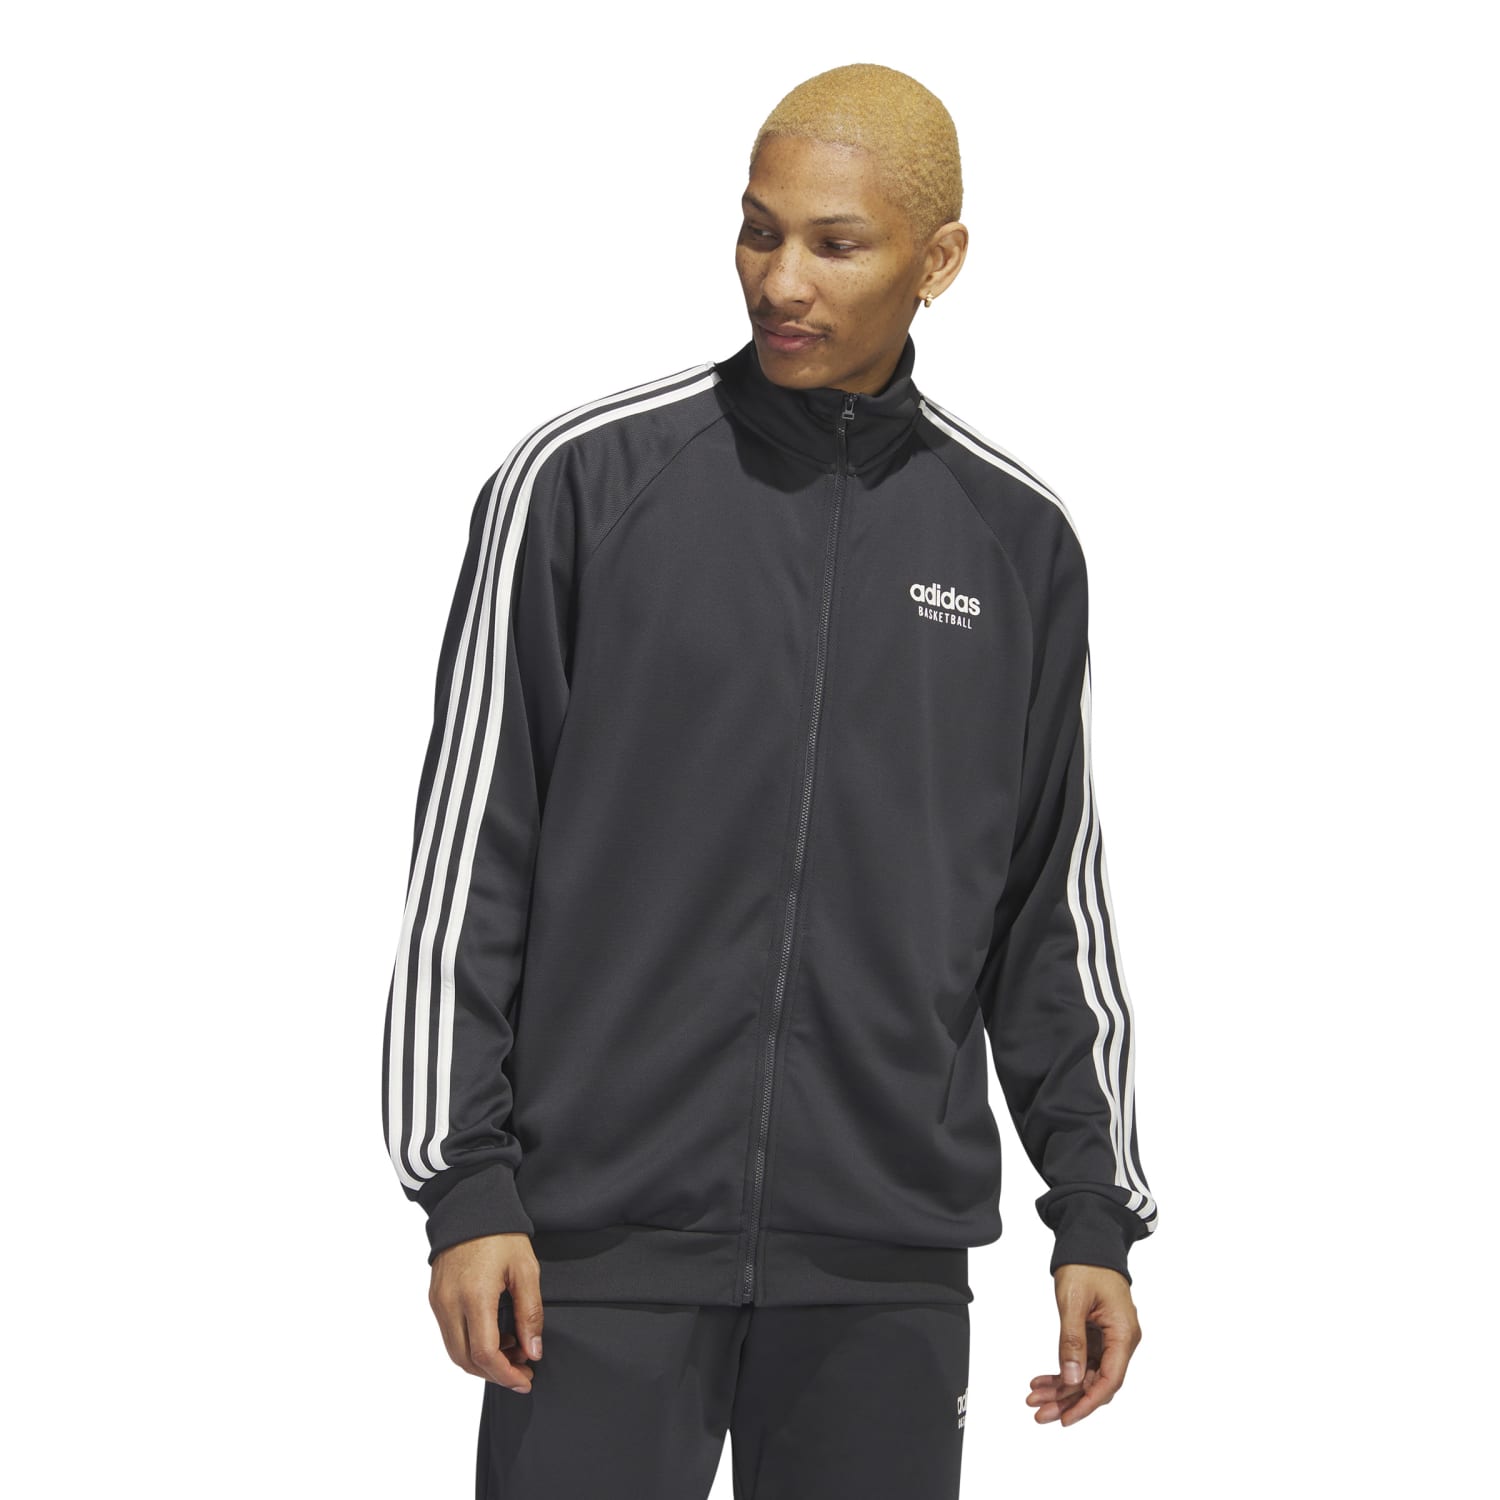 adidas basketball men select jacket Training grey il2189 274